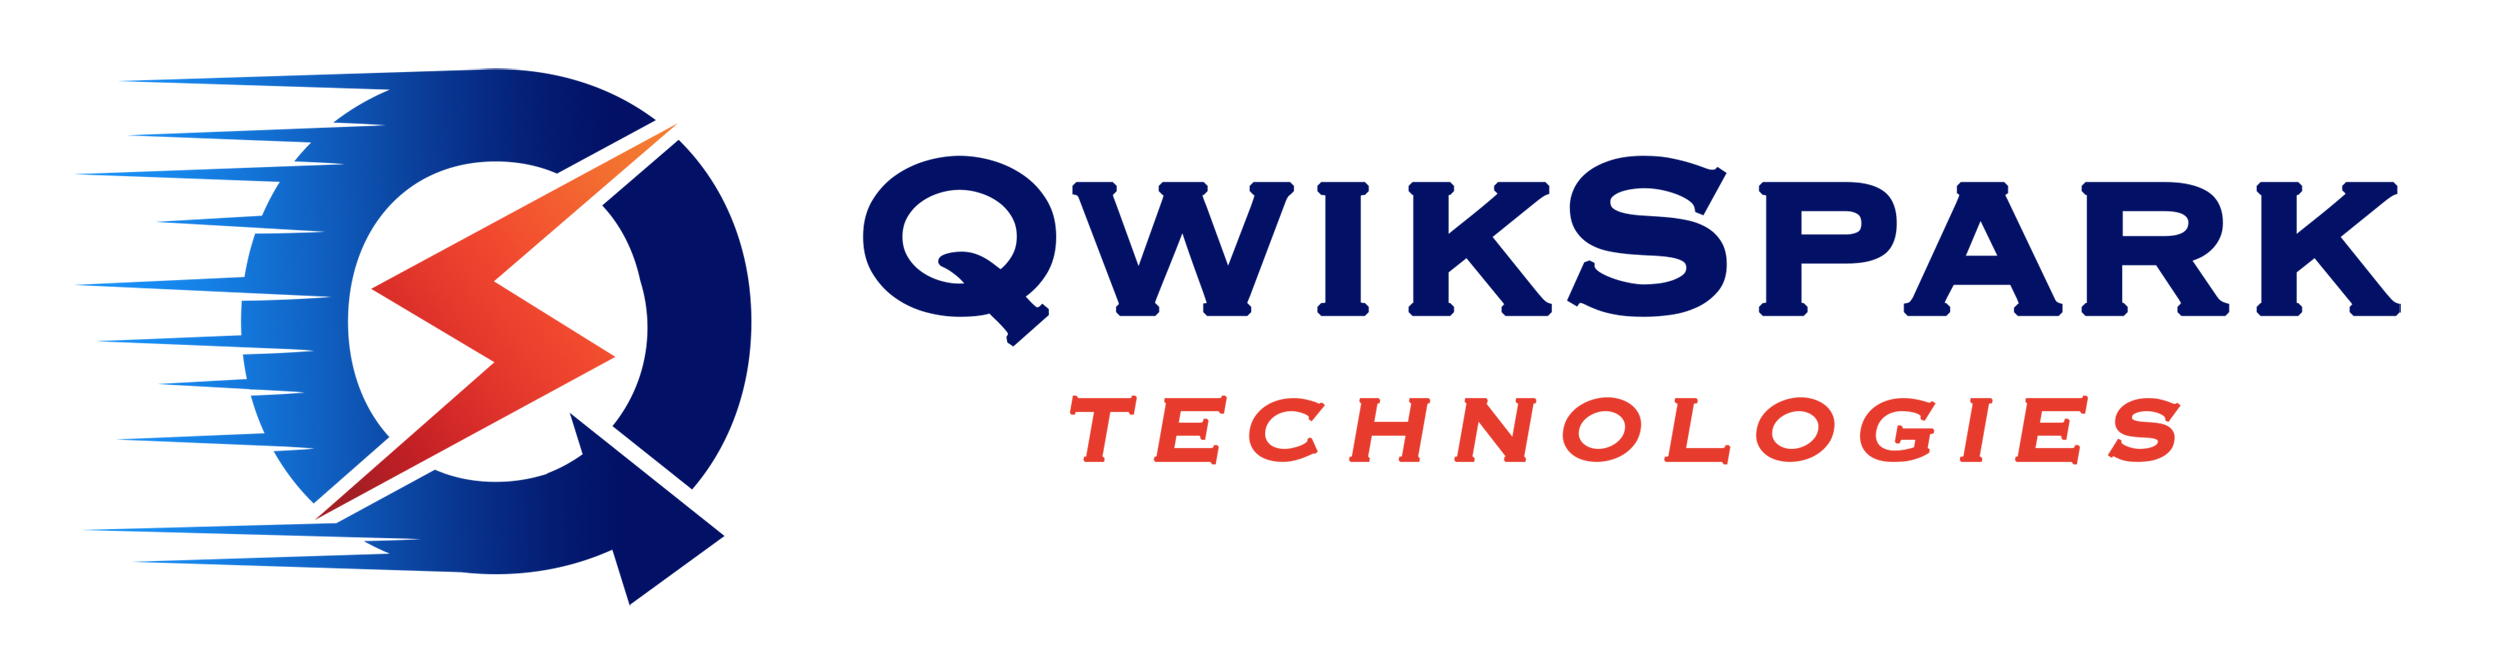 QwikSpark